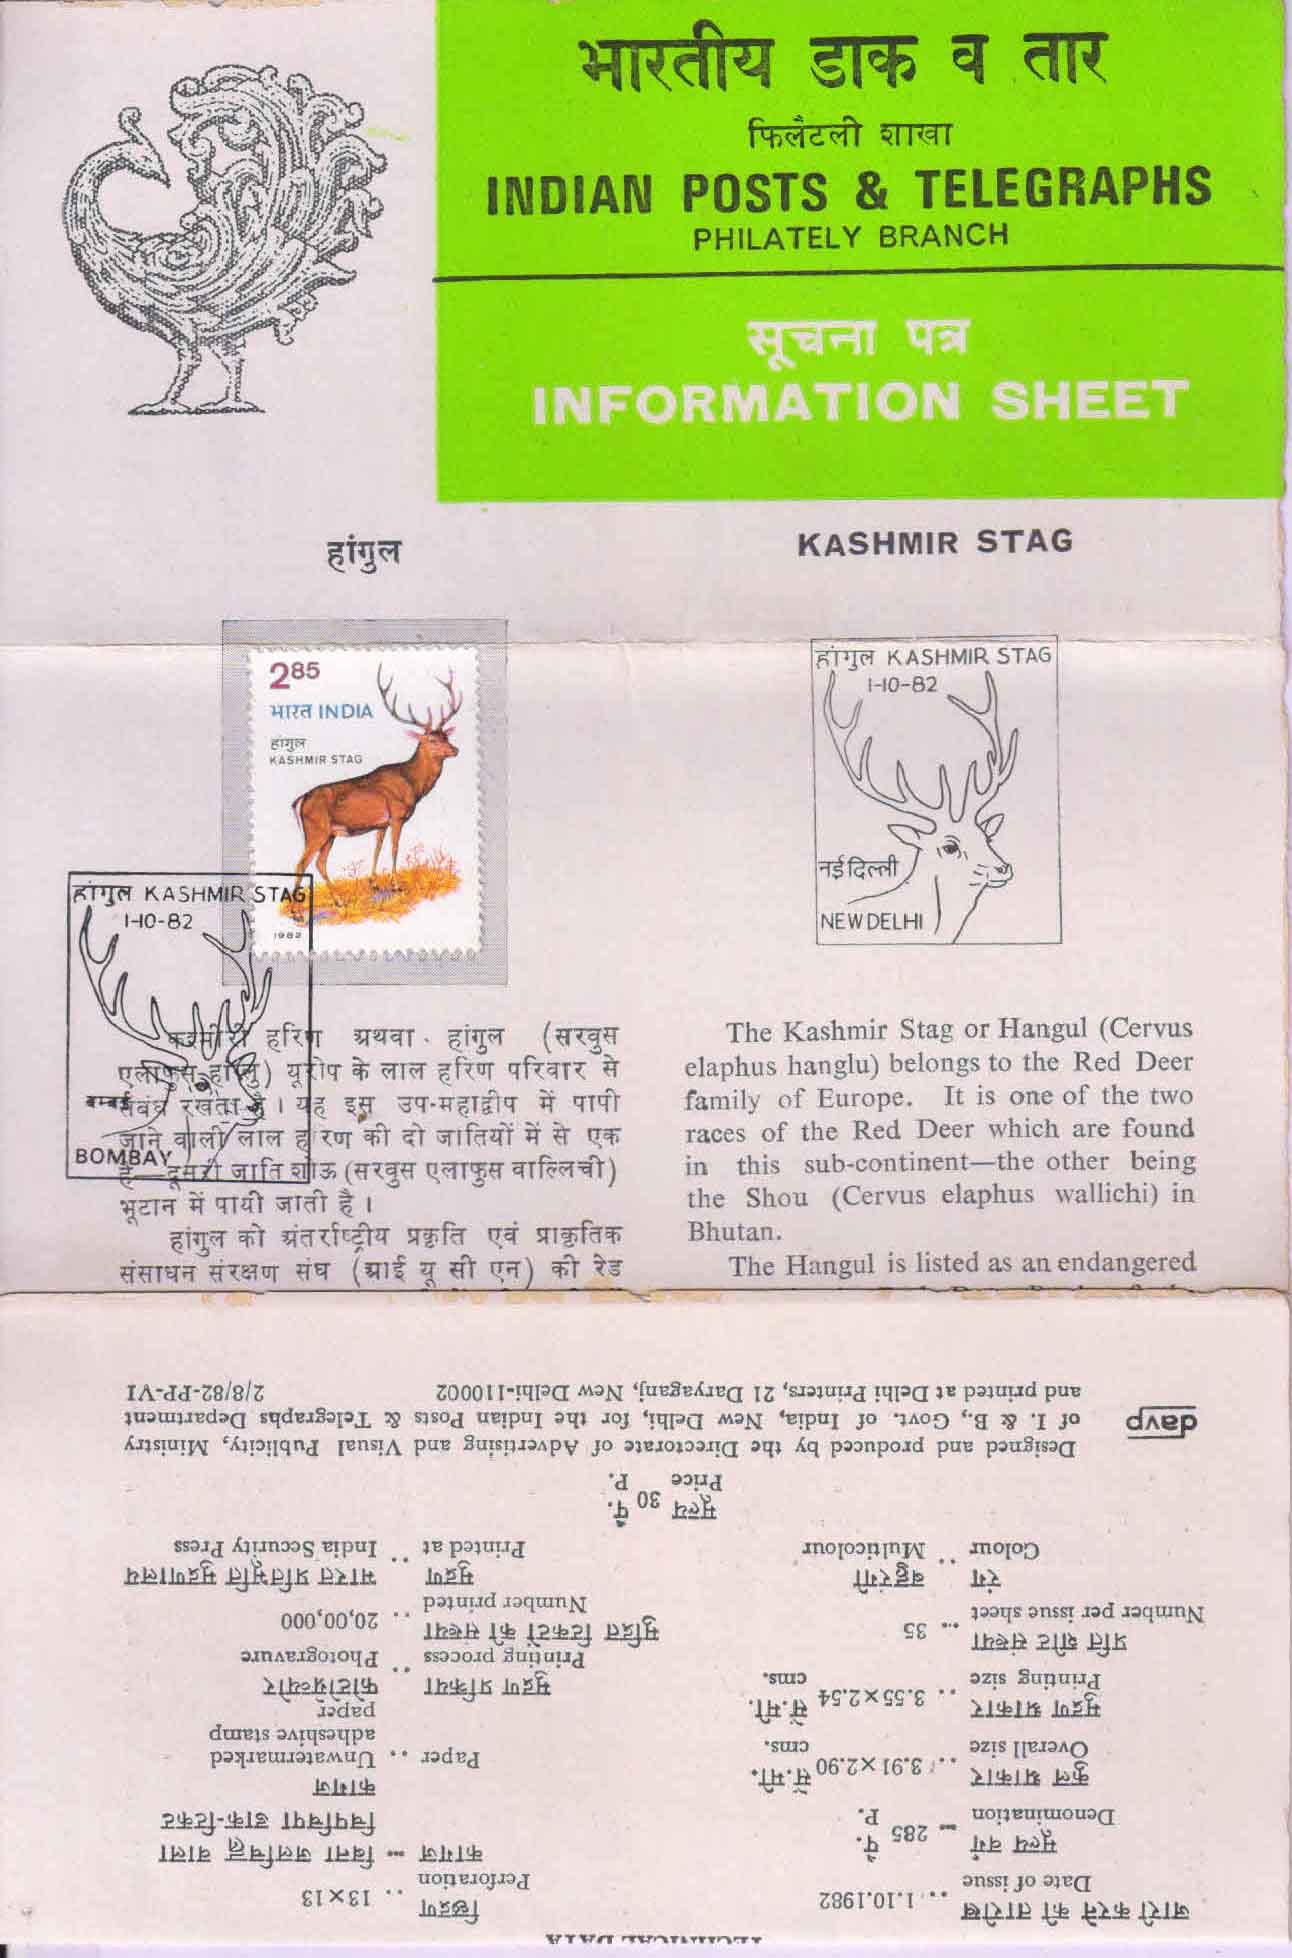 INDIA 1-10-1982, Wild Life Week, Kashmir Stag Animal, Information Sheet with Stamp